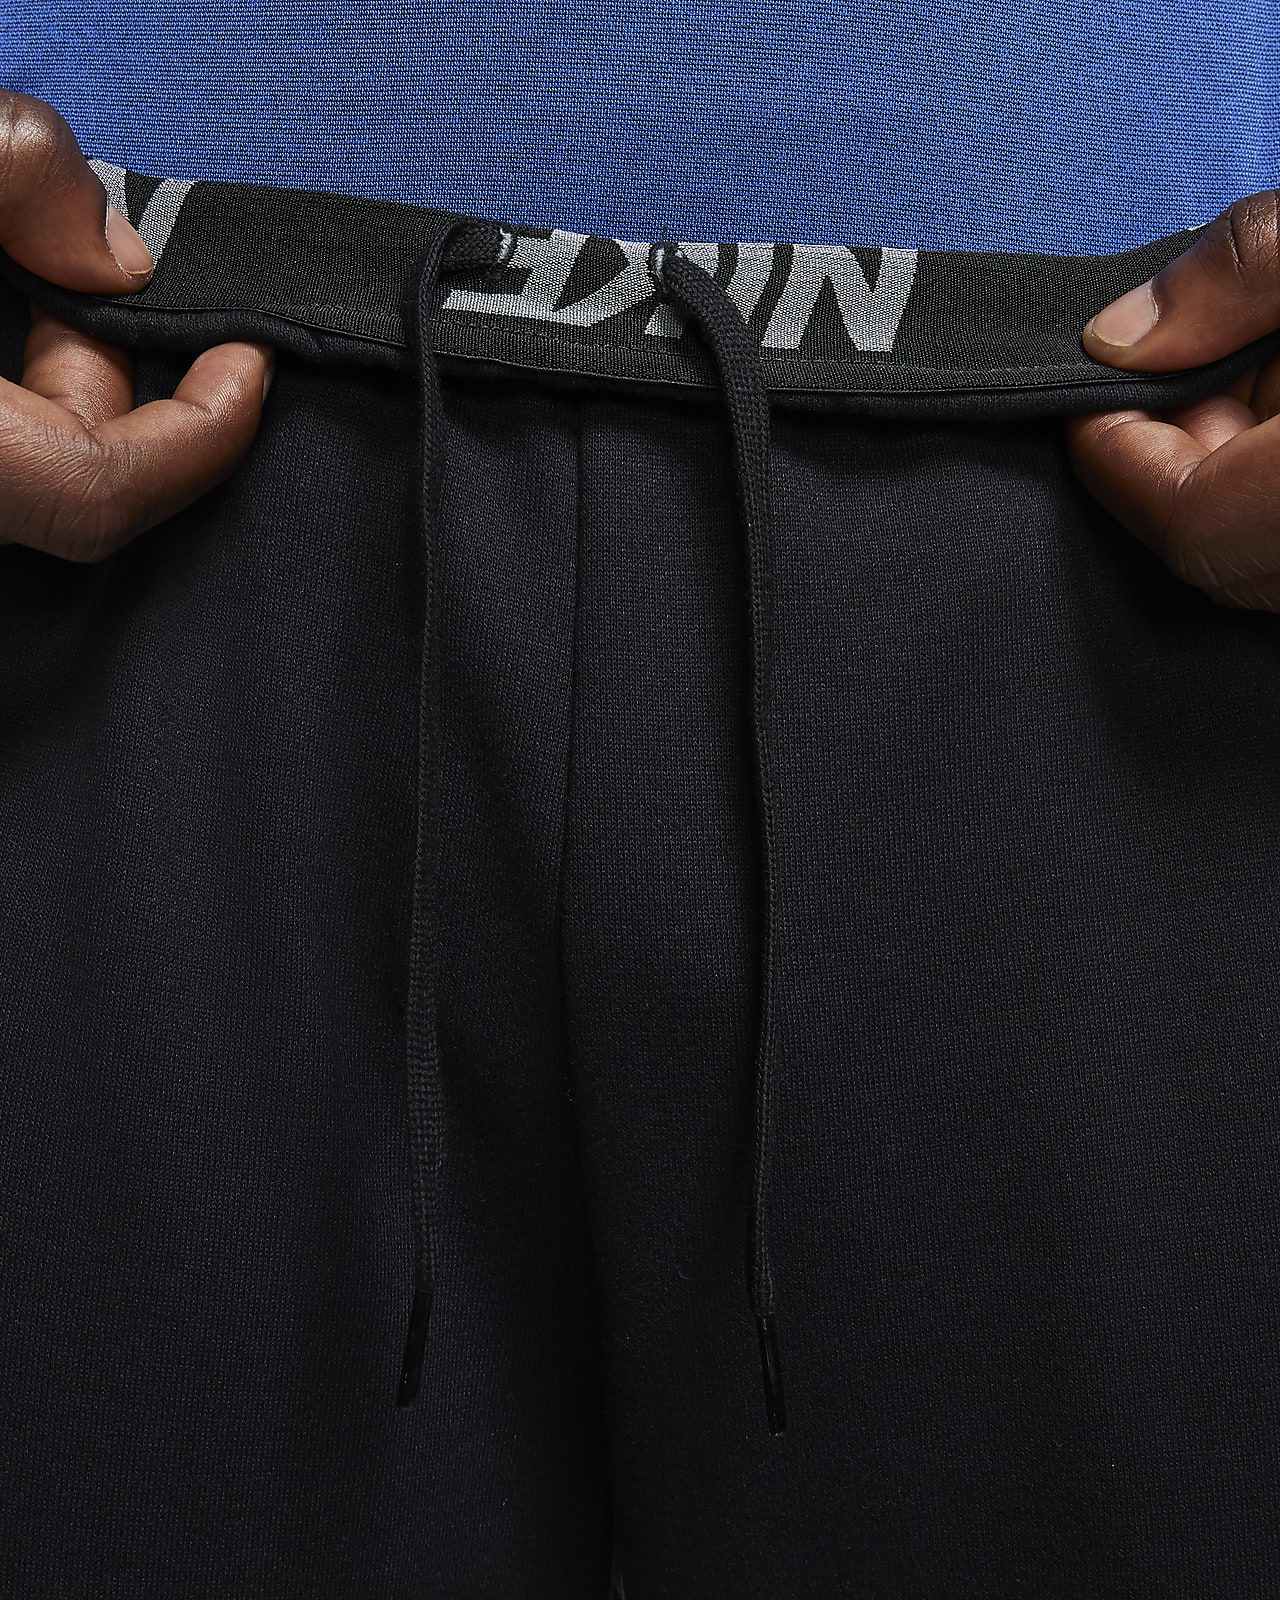 Sportswear Repel Tech PackMens Lined Woven Trousers in KSA Nike SA